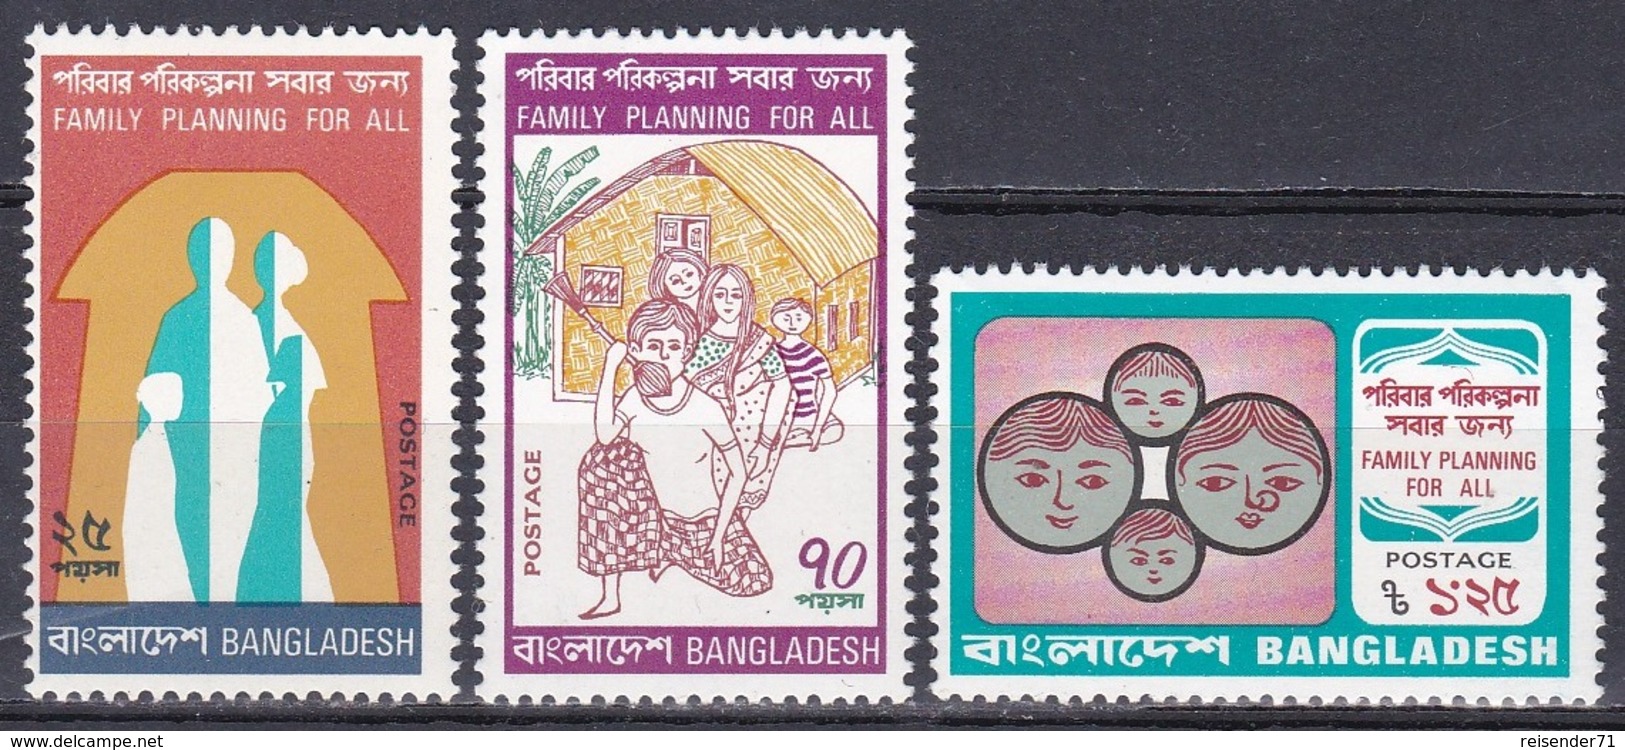 Bangladesch Bangladesh 1974 Gesellschaft Society Soziales Familie Familienplanung Family Planning, Mi. 52-4 ** - Bangladesh